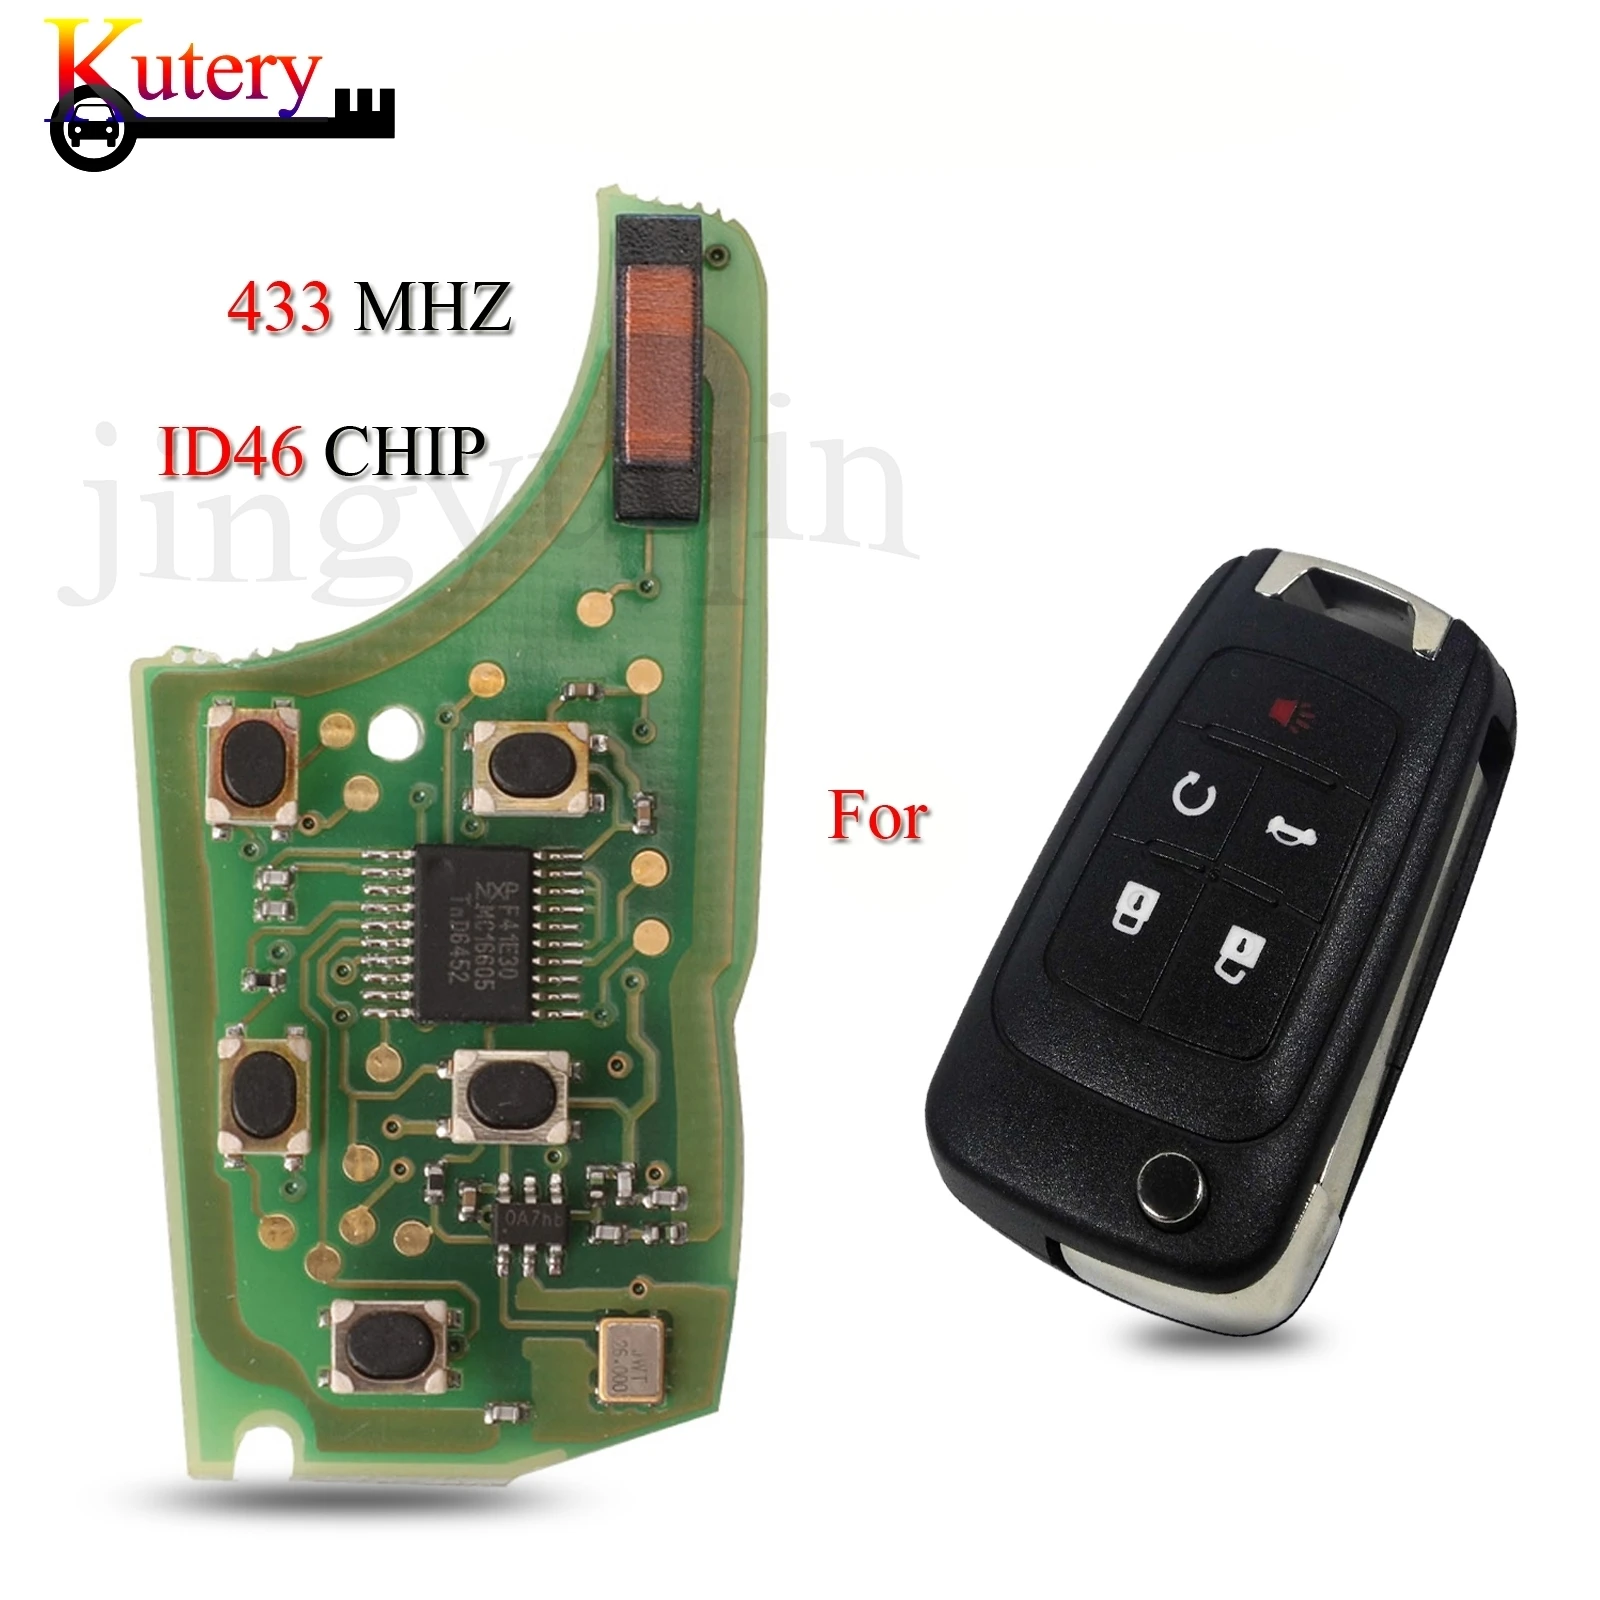 

jingyuqin 10pcs/Lot Remote Car Key Circuit Board For Chevrolet Cruz Aveo Camero Malibu Buick Verano Encore 433MHZ ID46 Chip